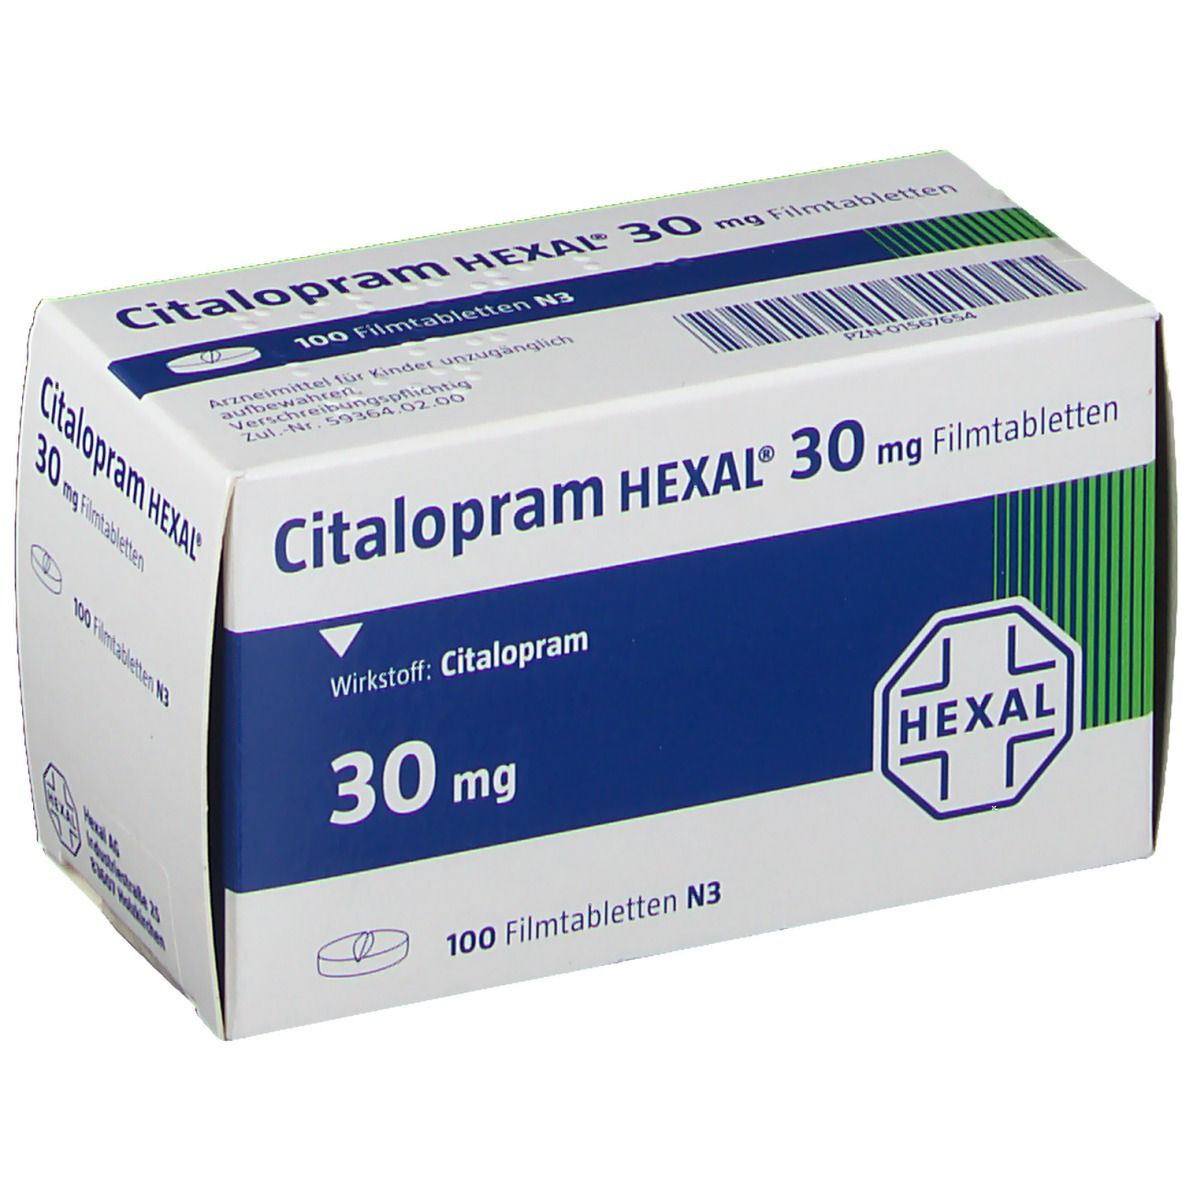 Citalopram Hexal 30 mg Filmtabletten